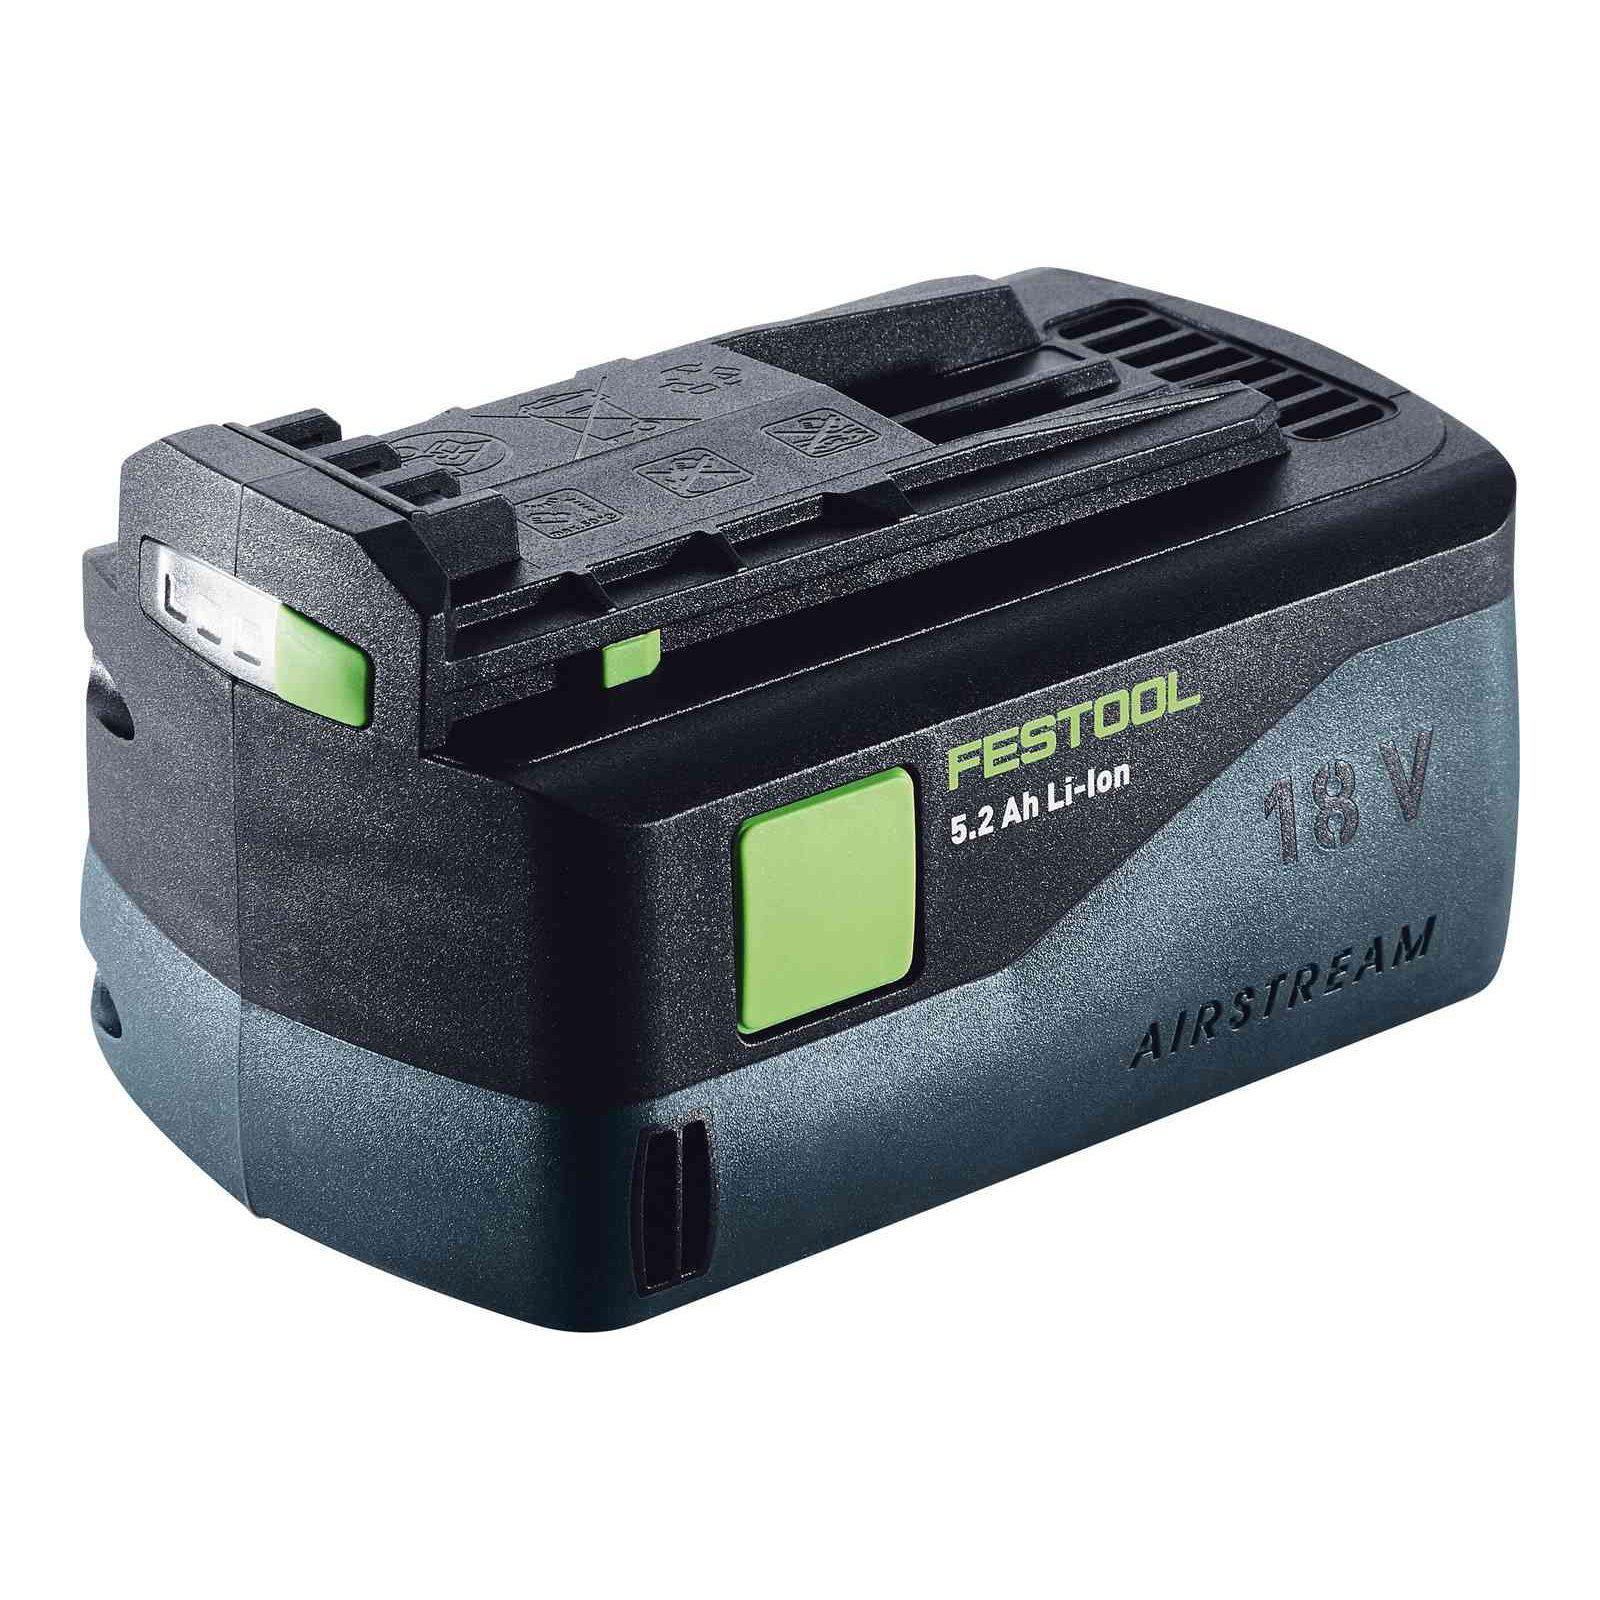 Battery 18𝑉 Li-Ion BP18 Festool-Batteries-FESTOOL-5.2𝐴𝒉-diyshop.co.za